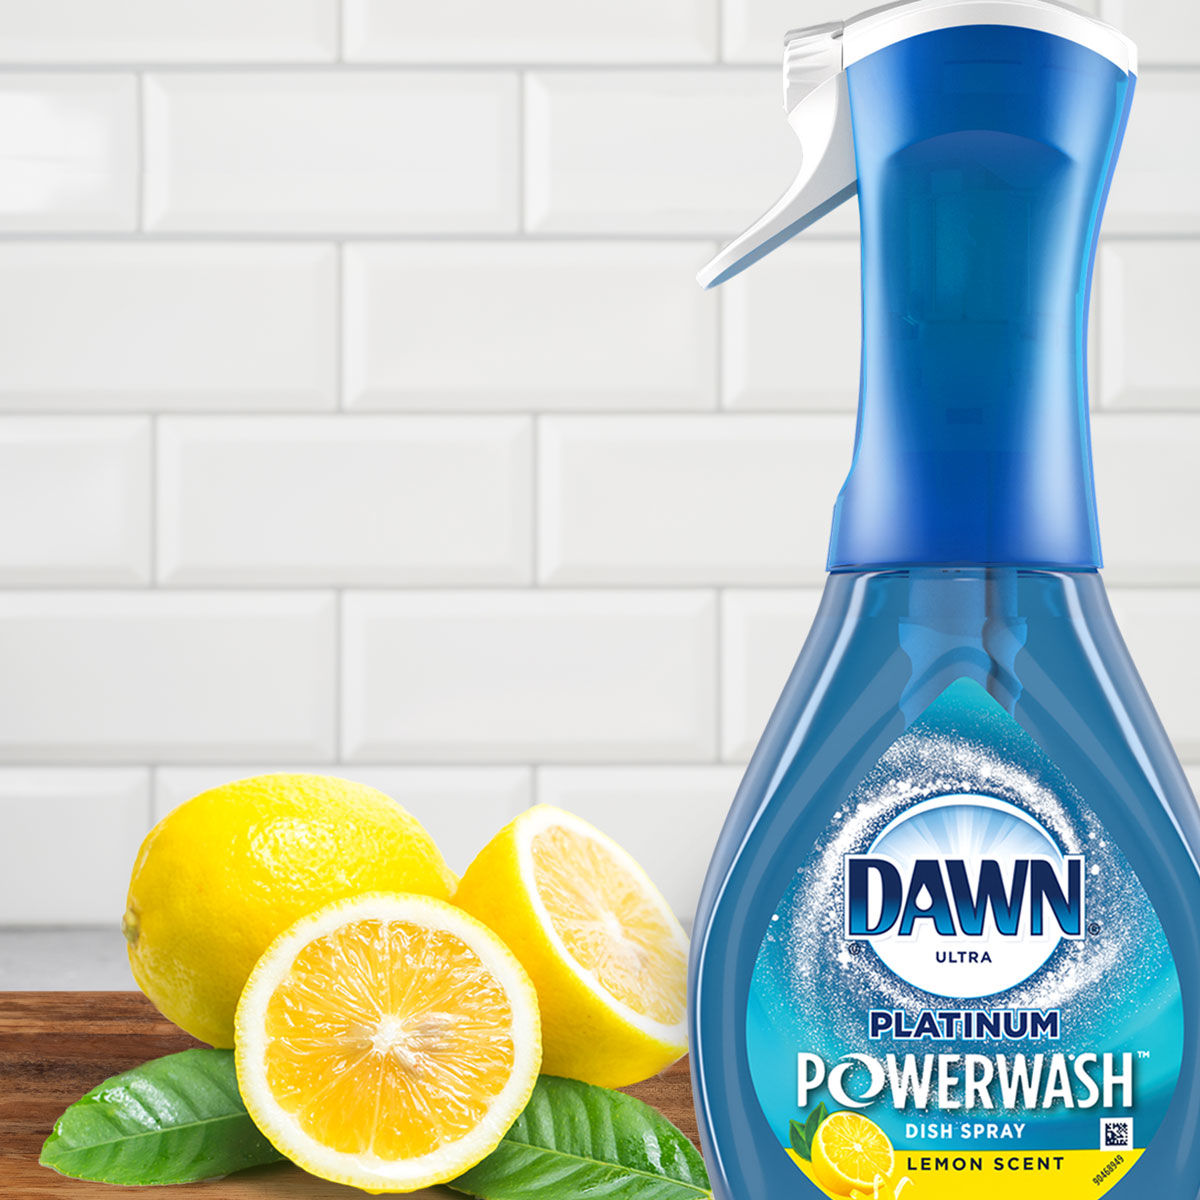 Reviews for Dawn Platinum Powerwash Dish Spray 16 oz. Fresh Scent